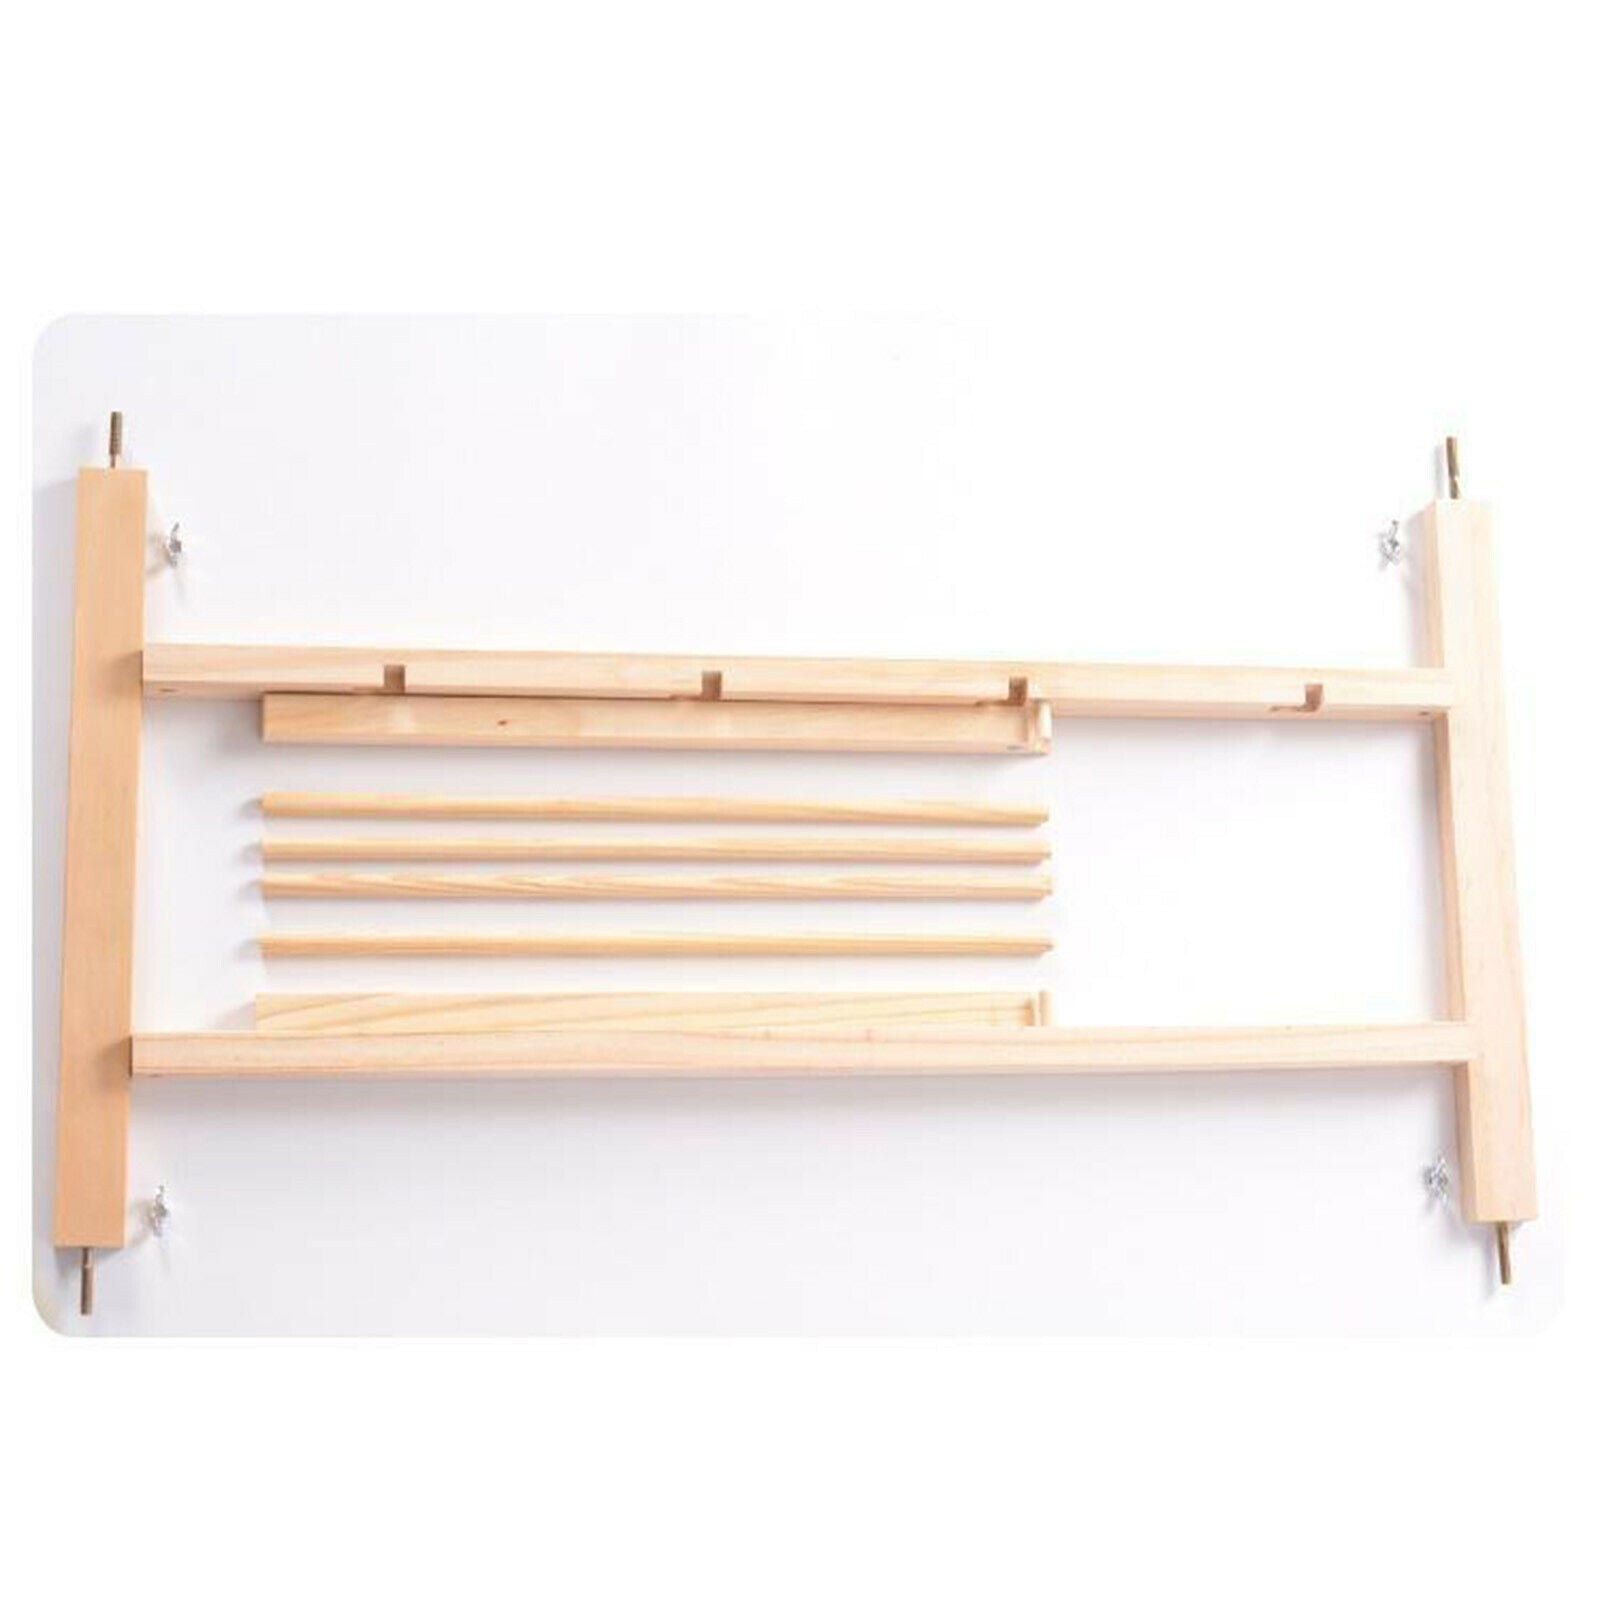 Wood Storage Thread Holder Sewing Organizer Table Curling Holder